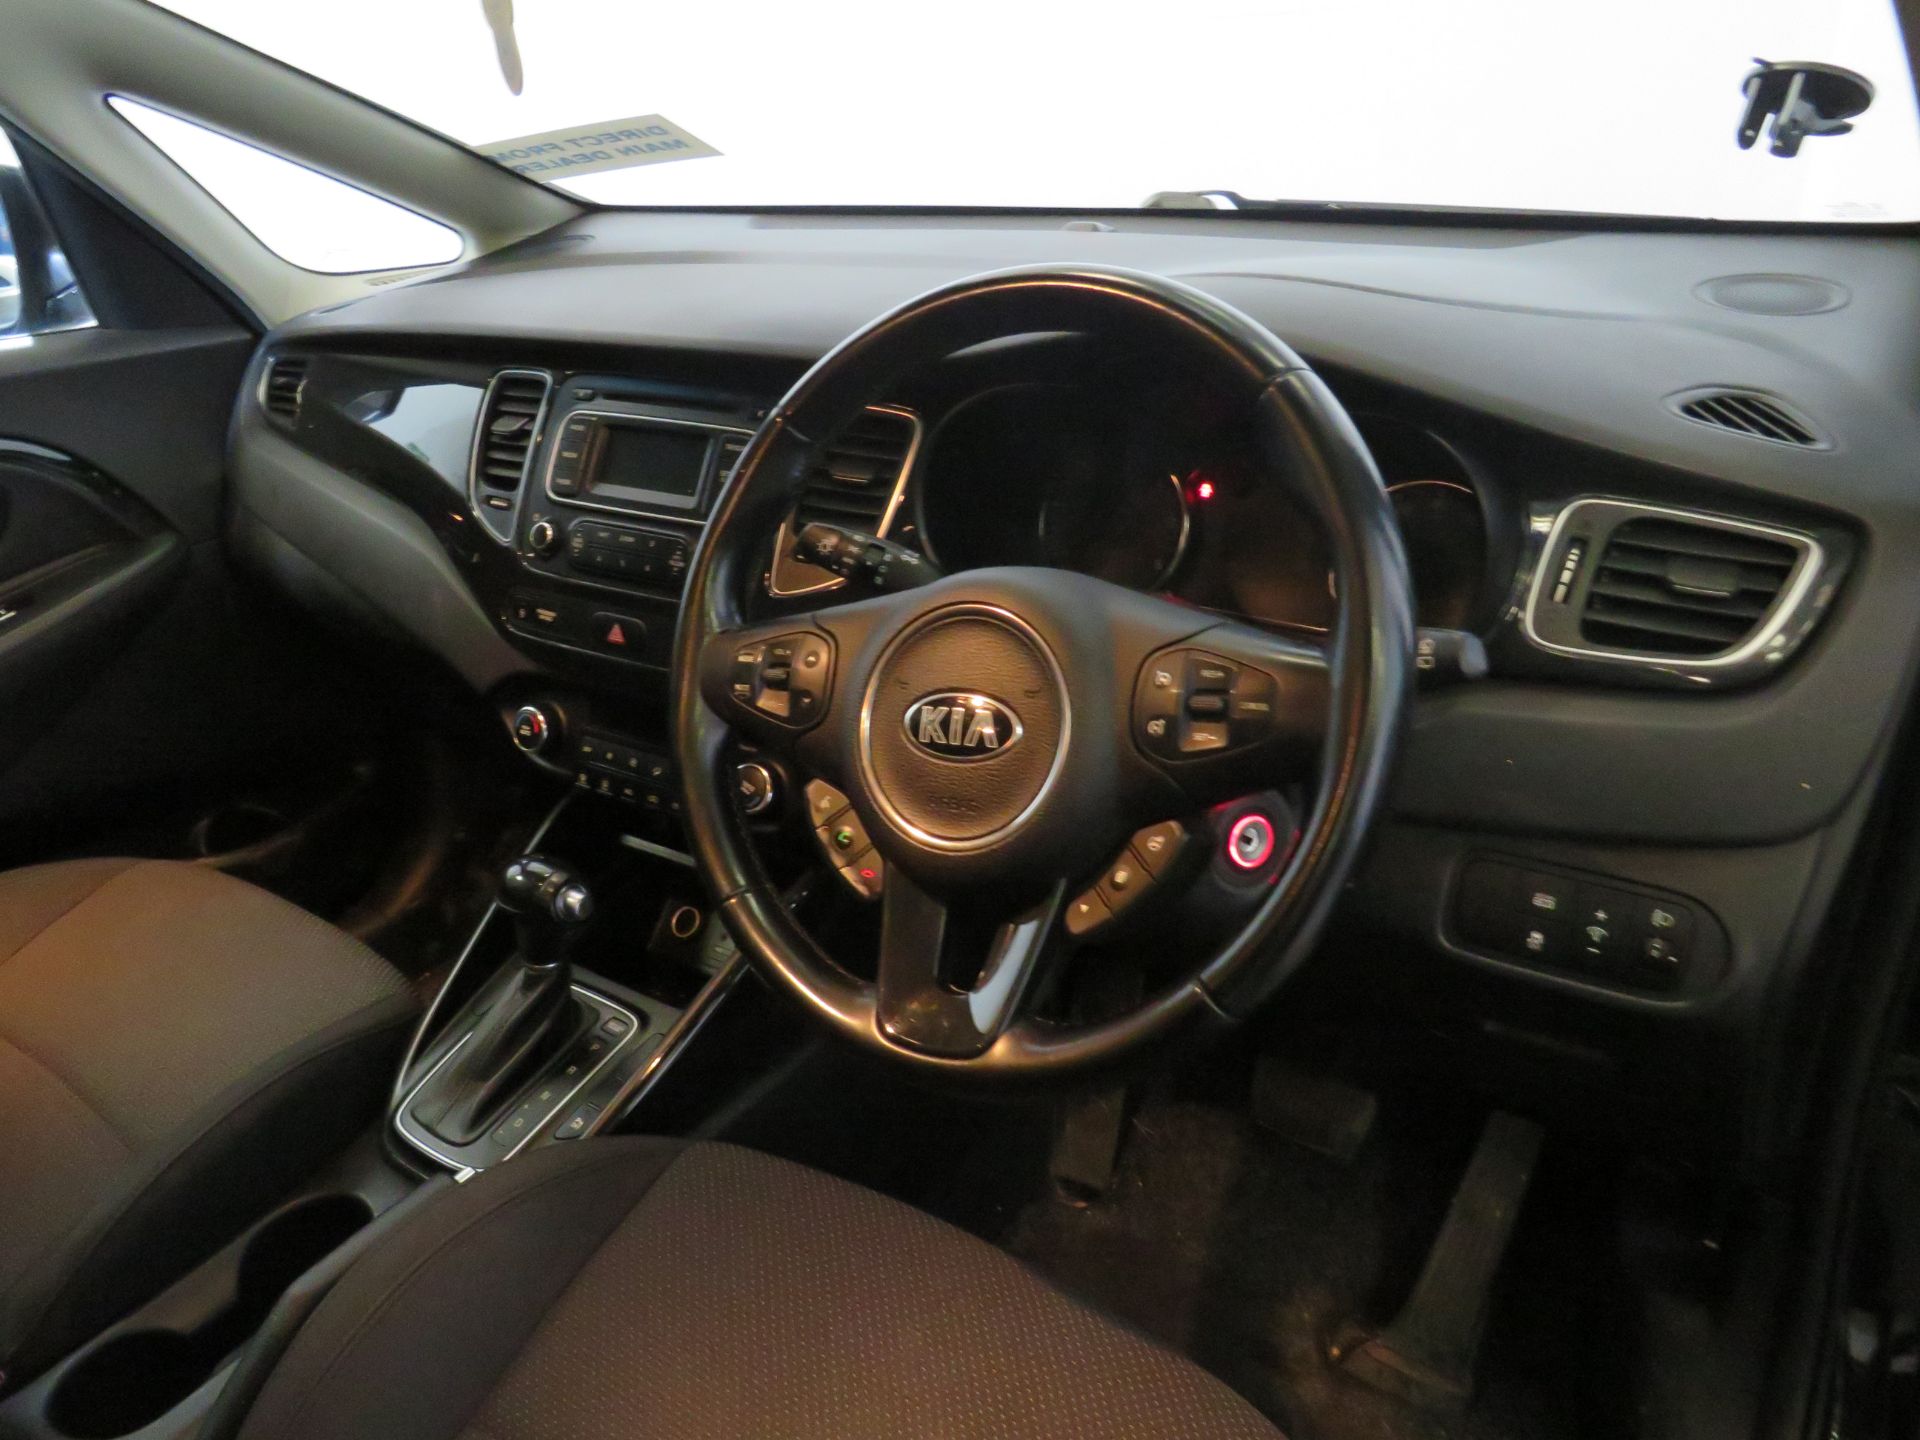 2014 Kia Carens 2 CRDI Auto - 1685cc - Image 8 of 9